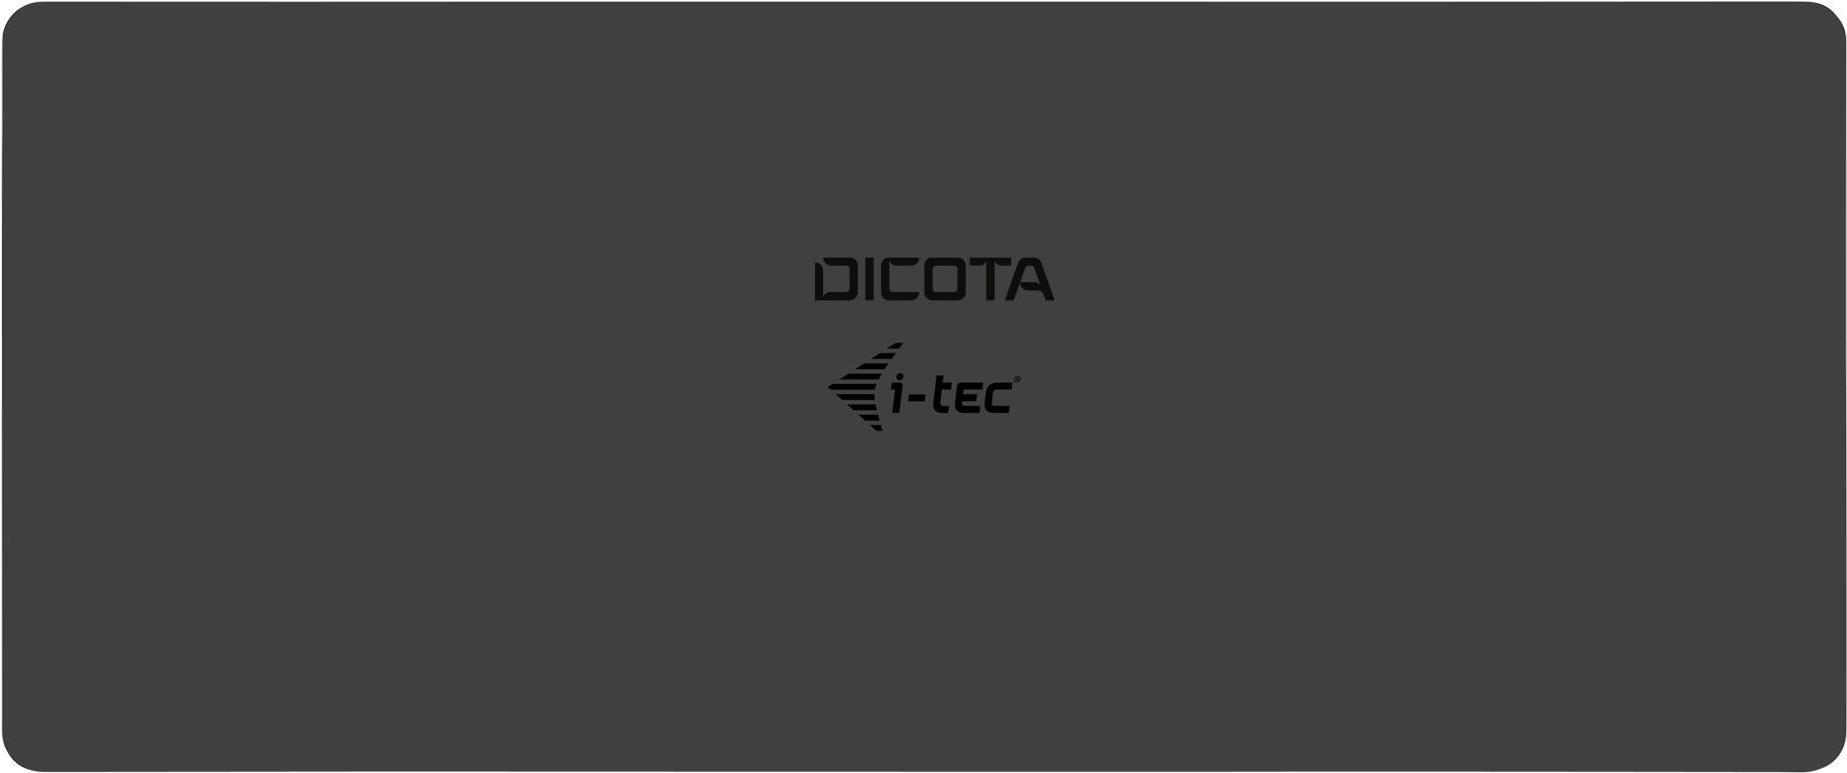 DICOTA i-tec Dockingstation (D31953)